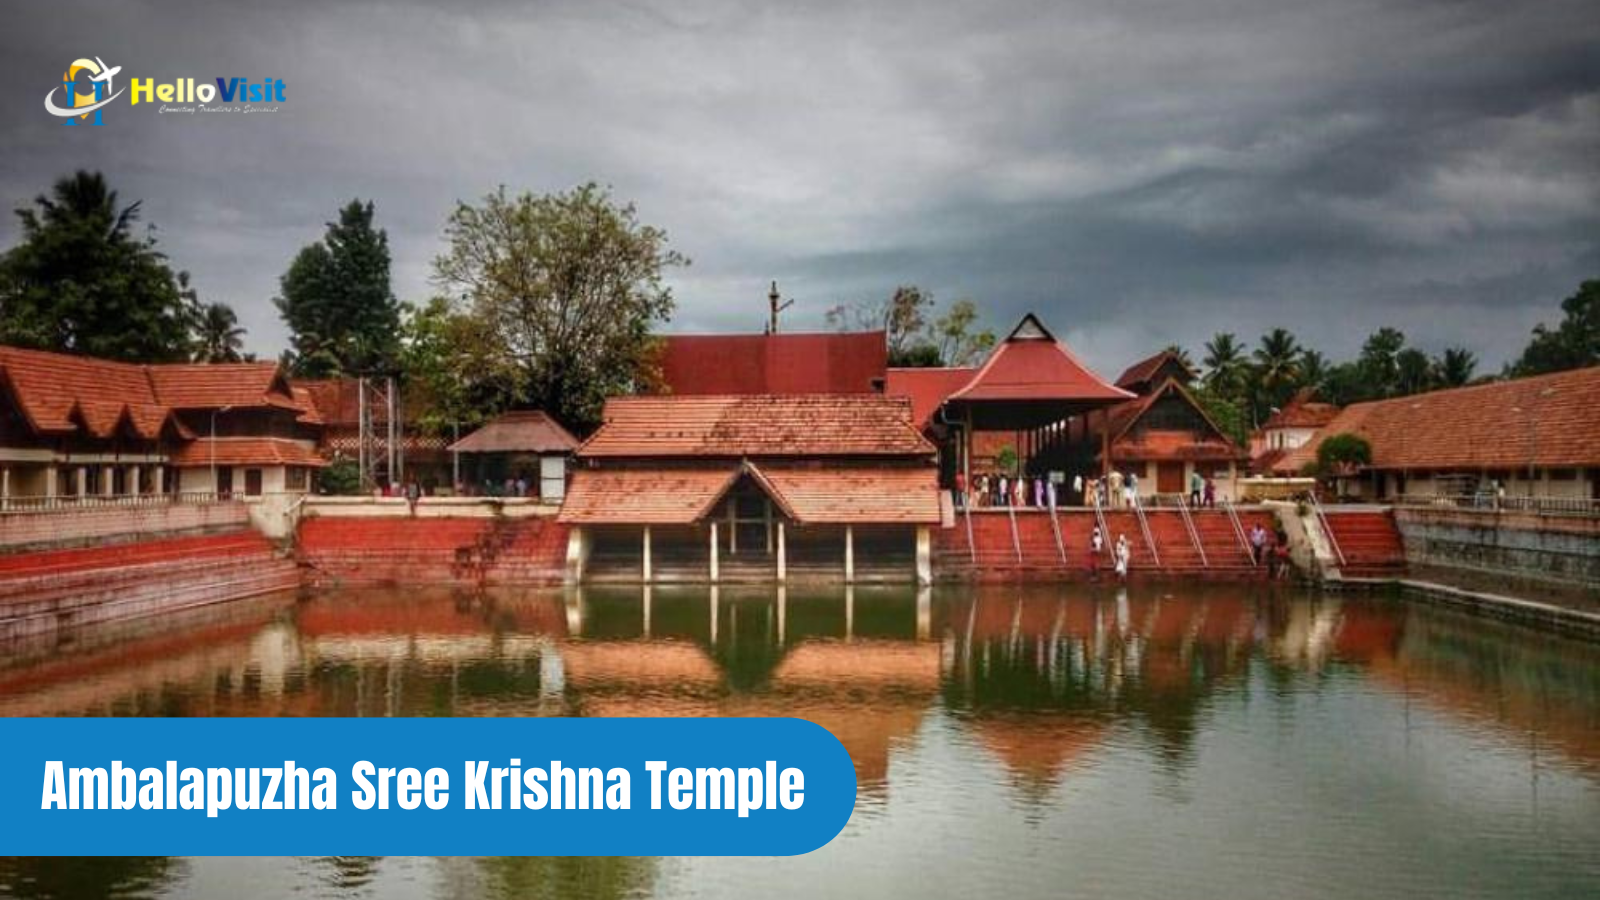 Ambalapuzha Sree Krishna Temple, Kerala